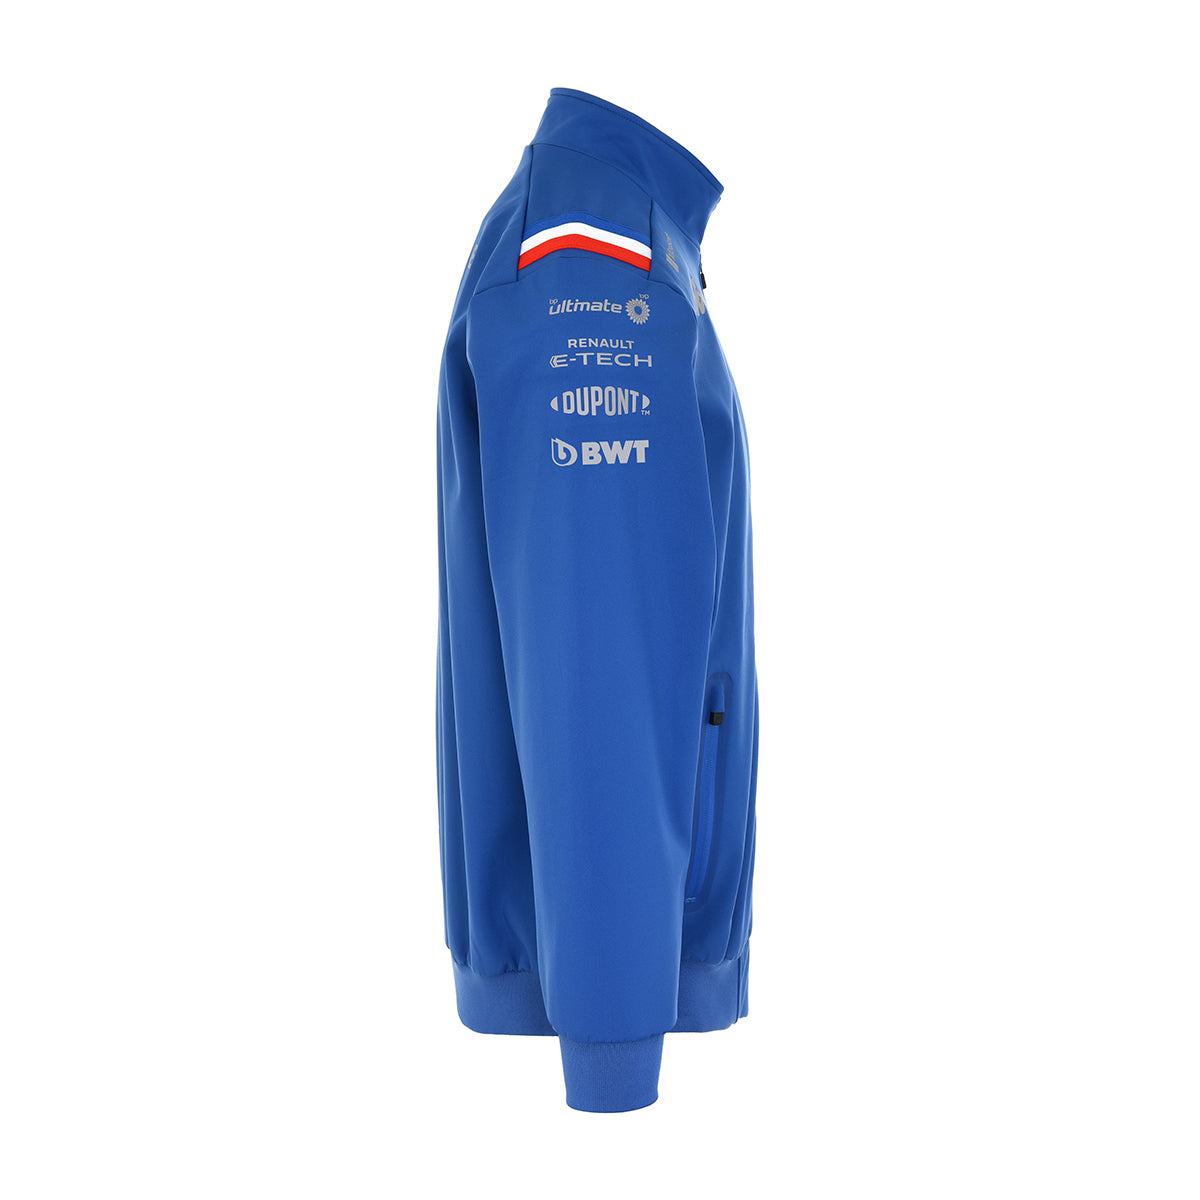 ALPINE F1 Team Softshell Jacket Blue Royal Marine